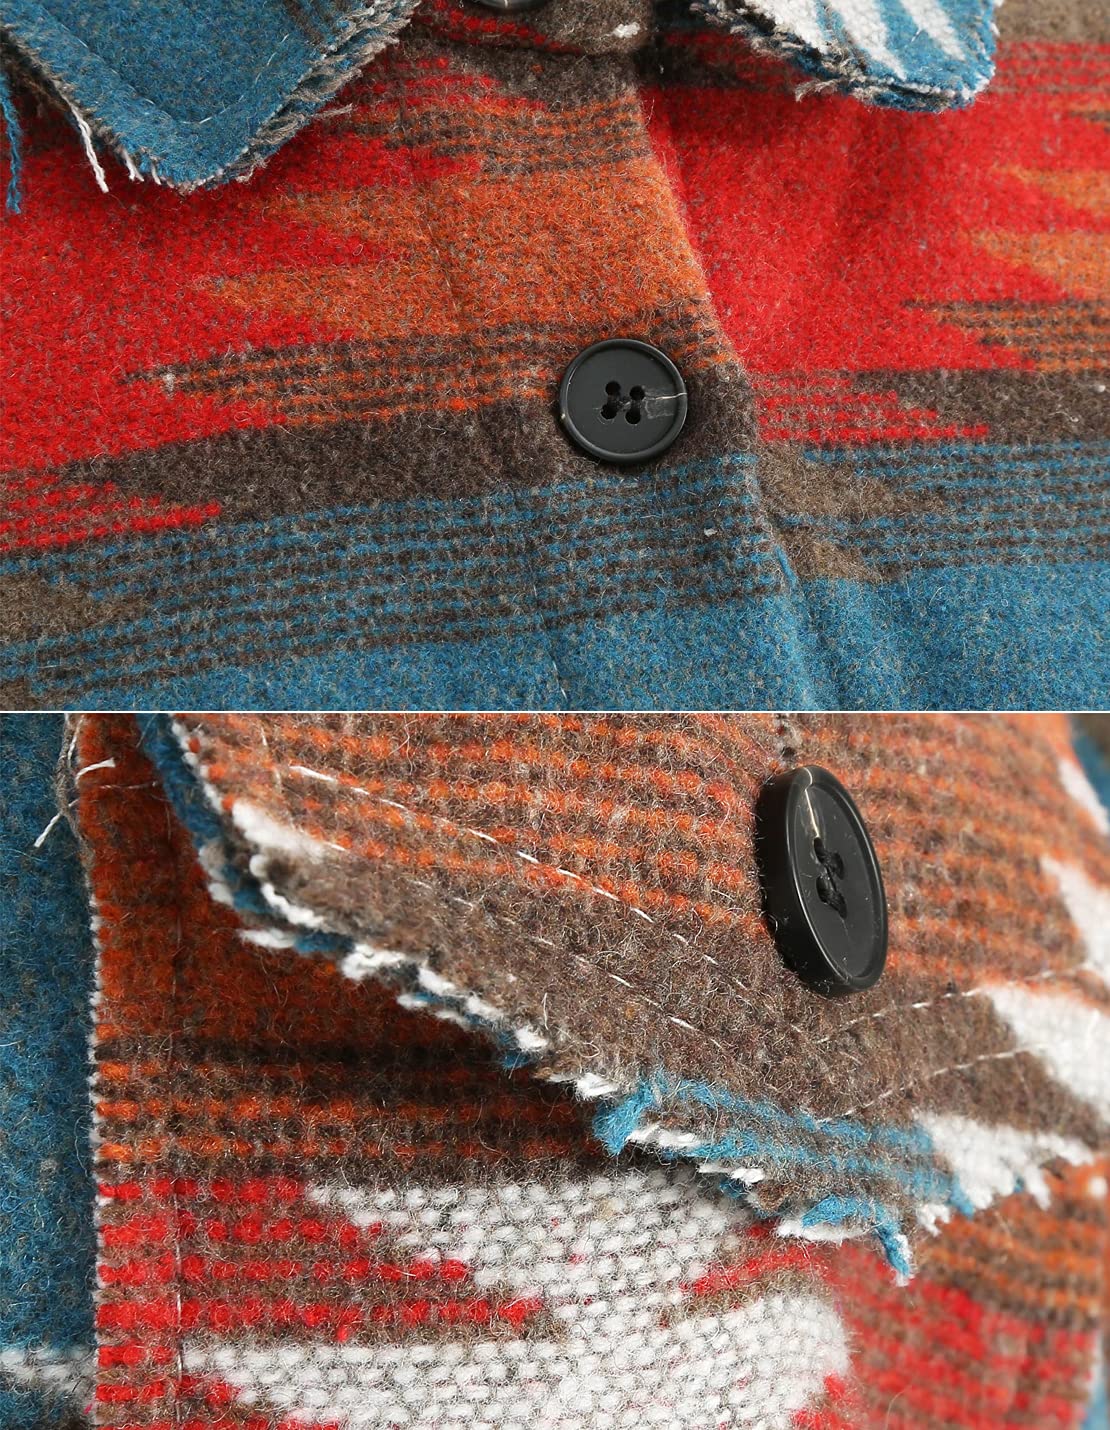 VIEWON Womens Aztec Print Shacket Jacket Western Long Sleeve Button Down Lightweight Casual Lapel Shirt Blouses Tops